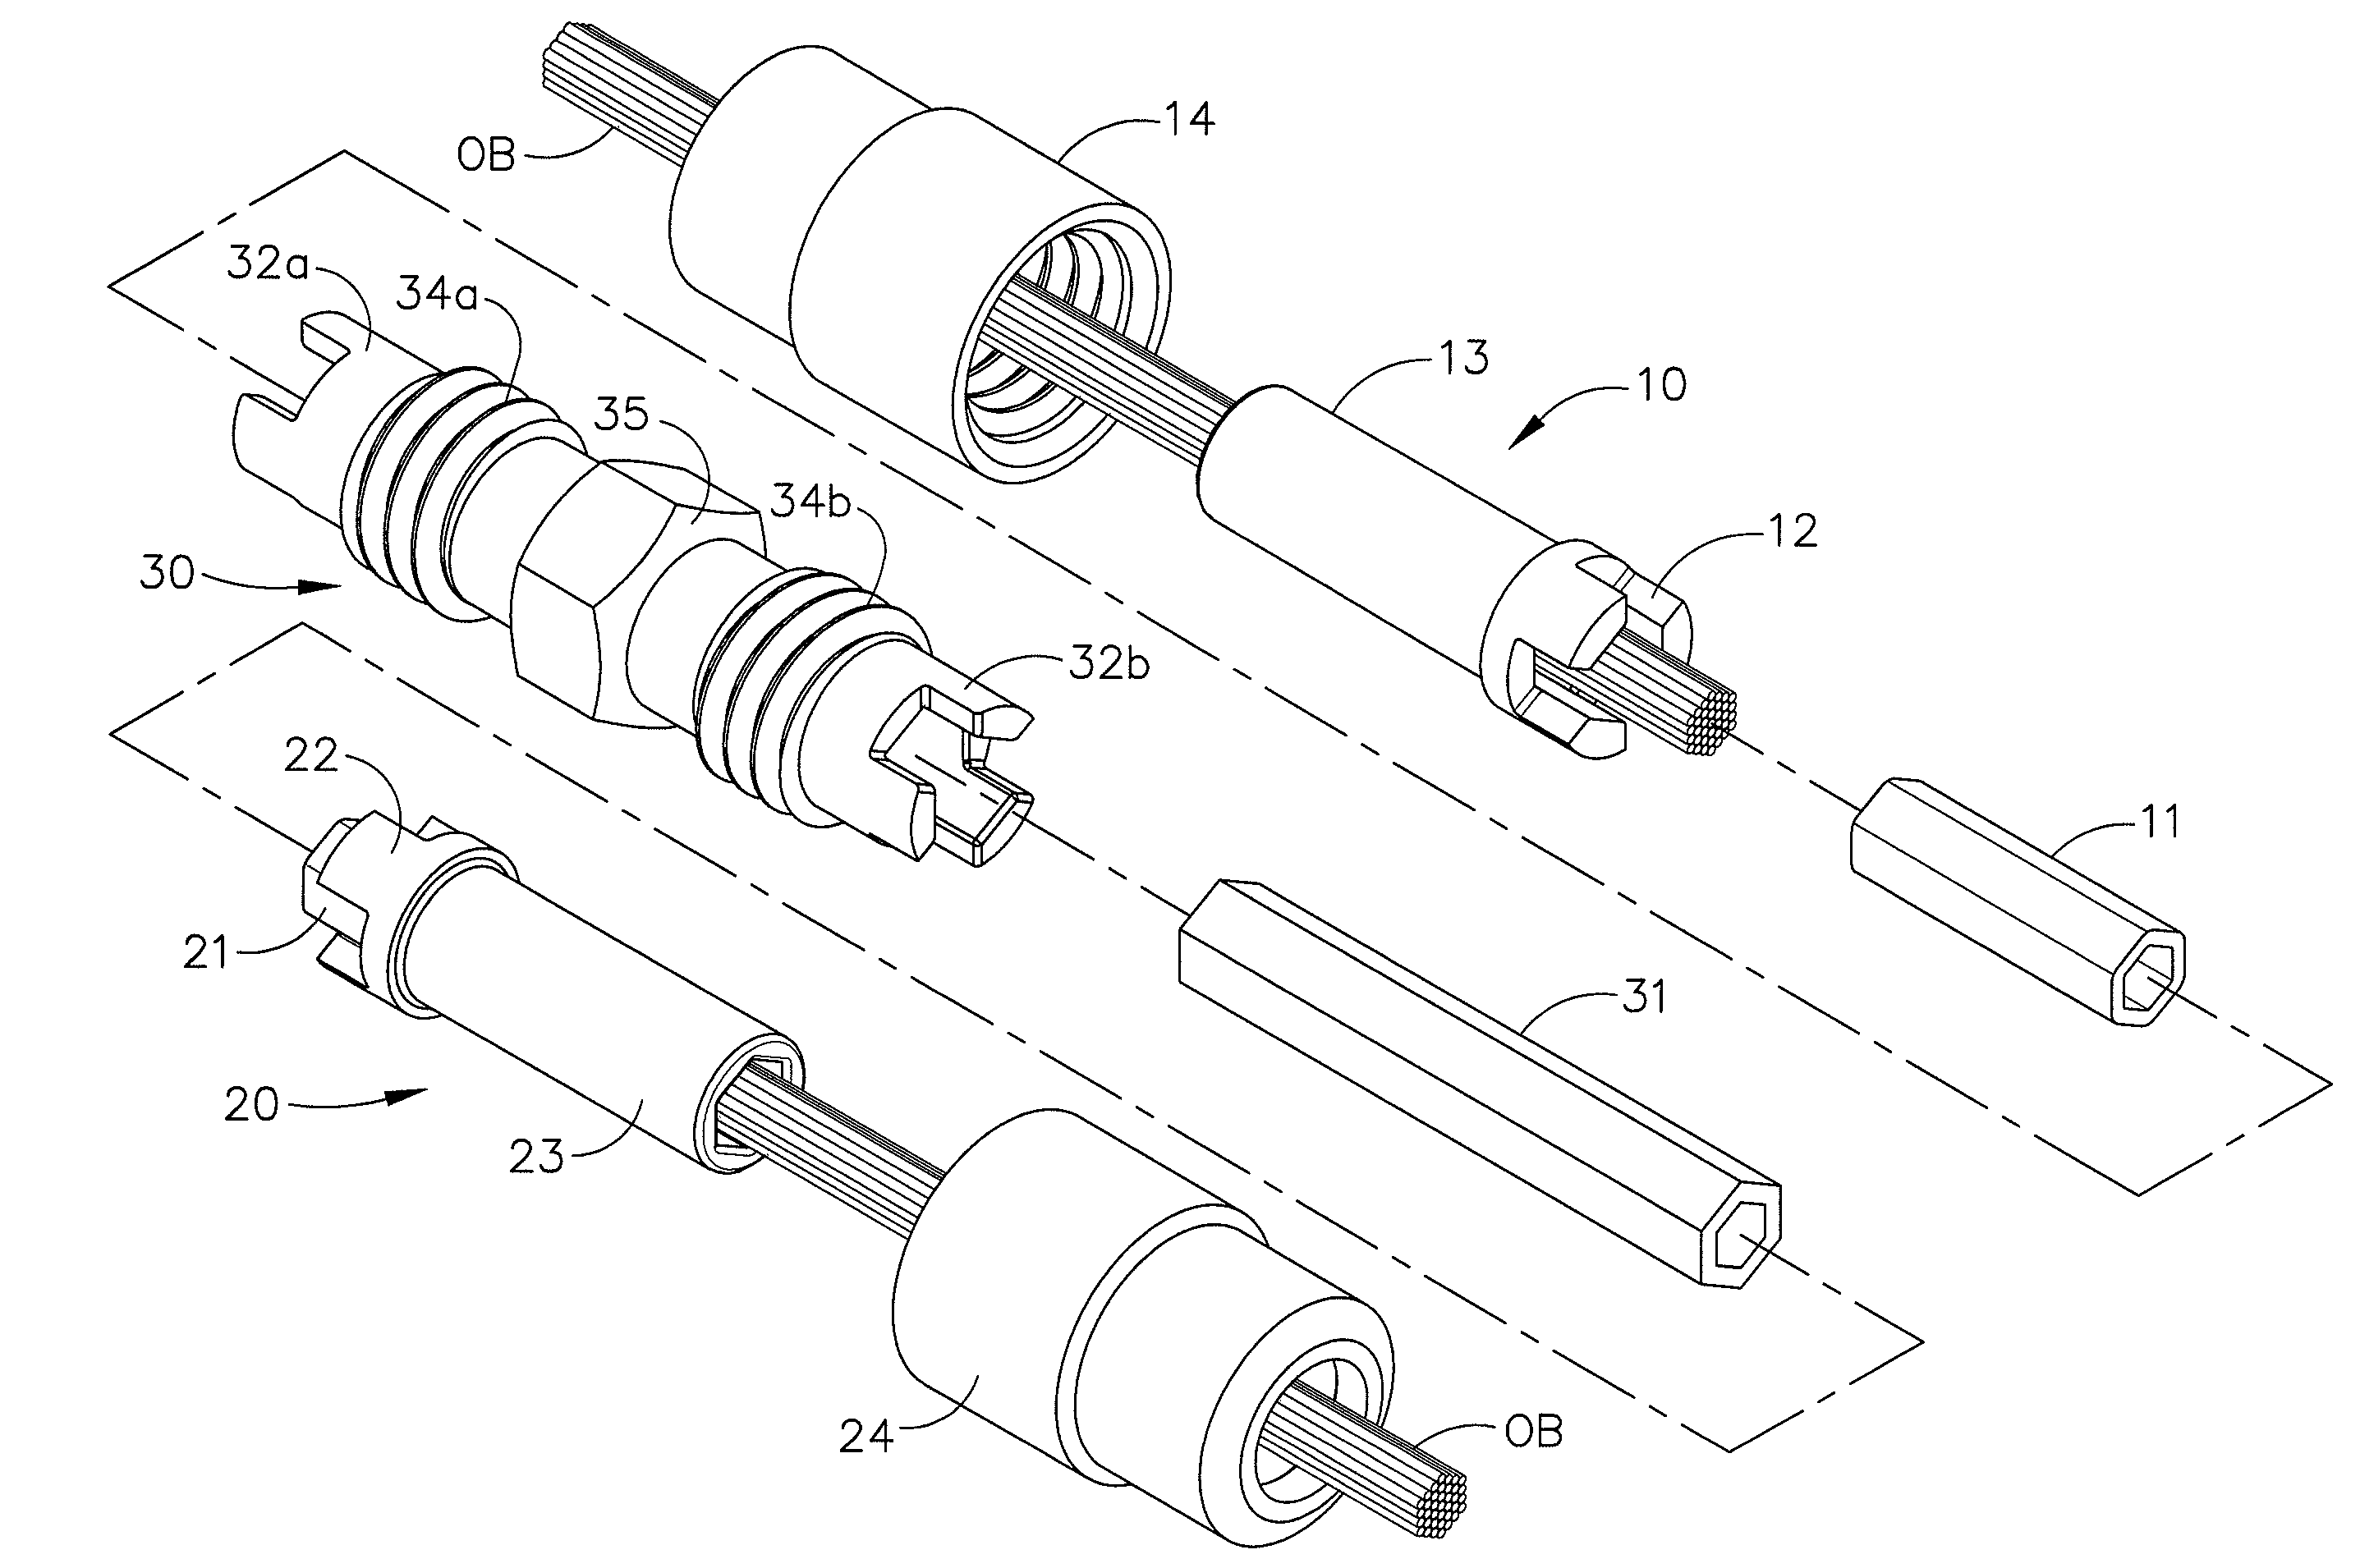 All-plastic optical mini-connector